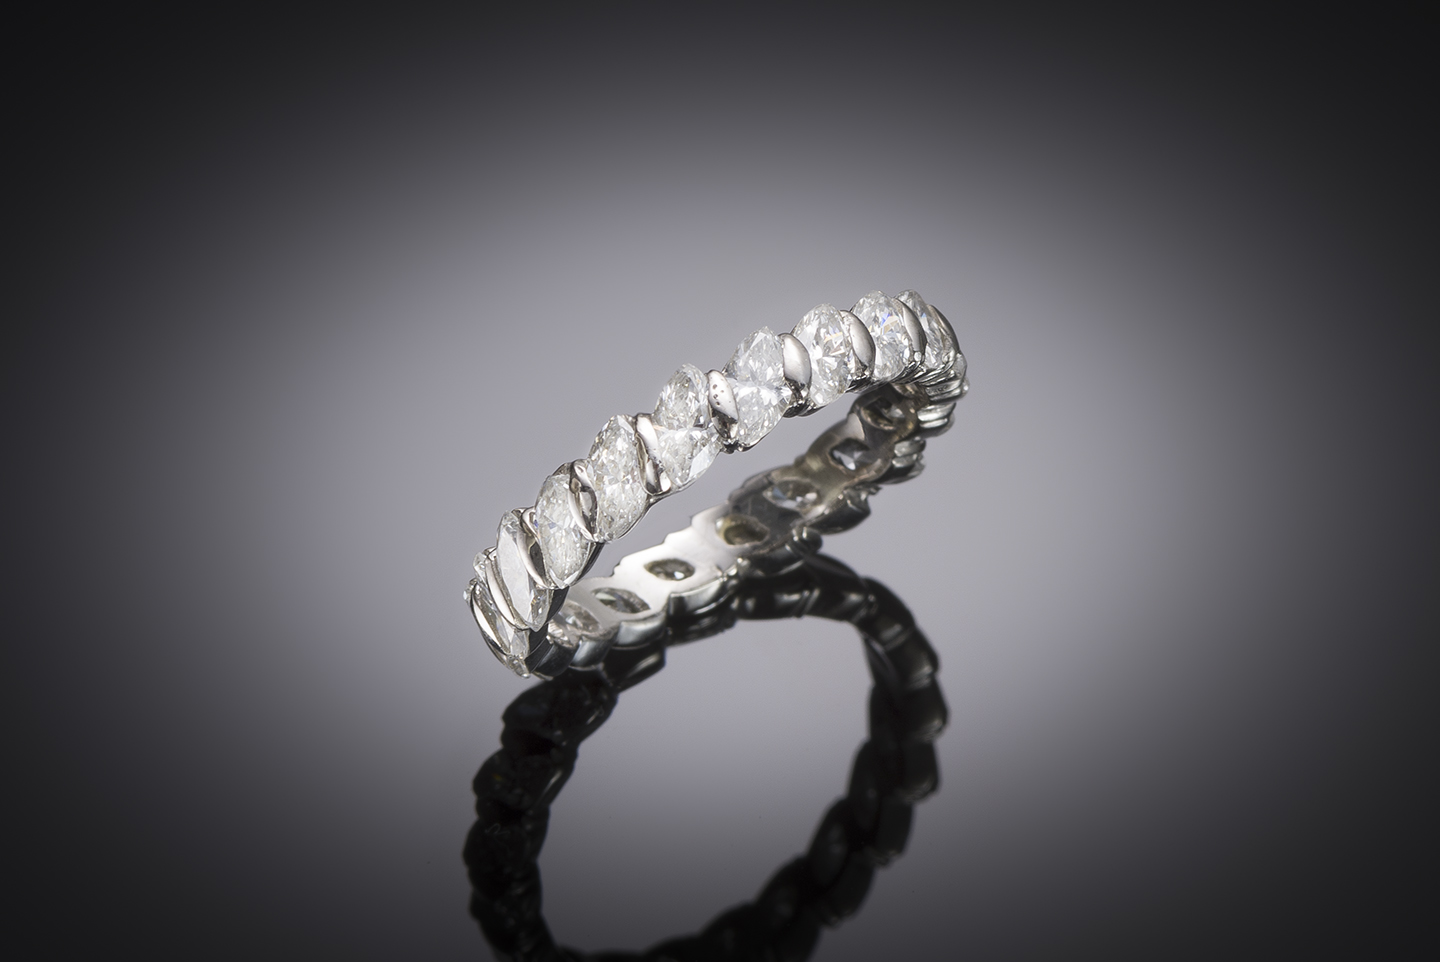 Van Cleef & Arpels diamond alliance (3.15 carats, D-E / IF-VVS) in platinum-1